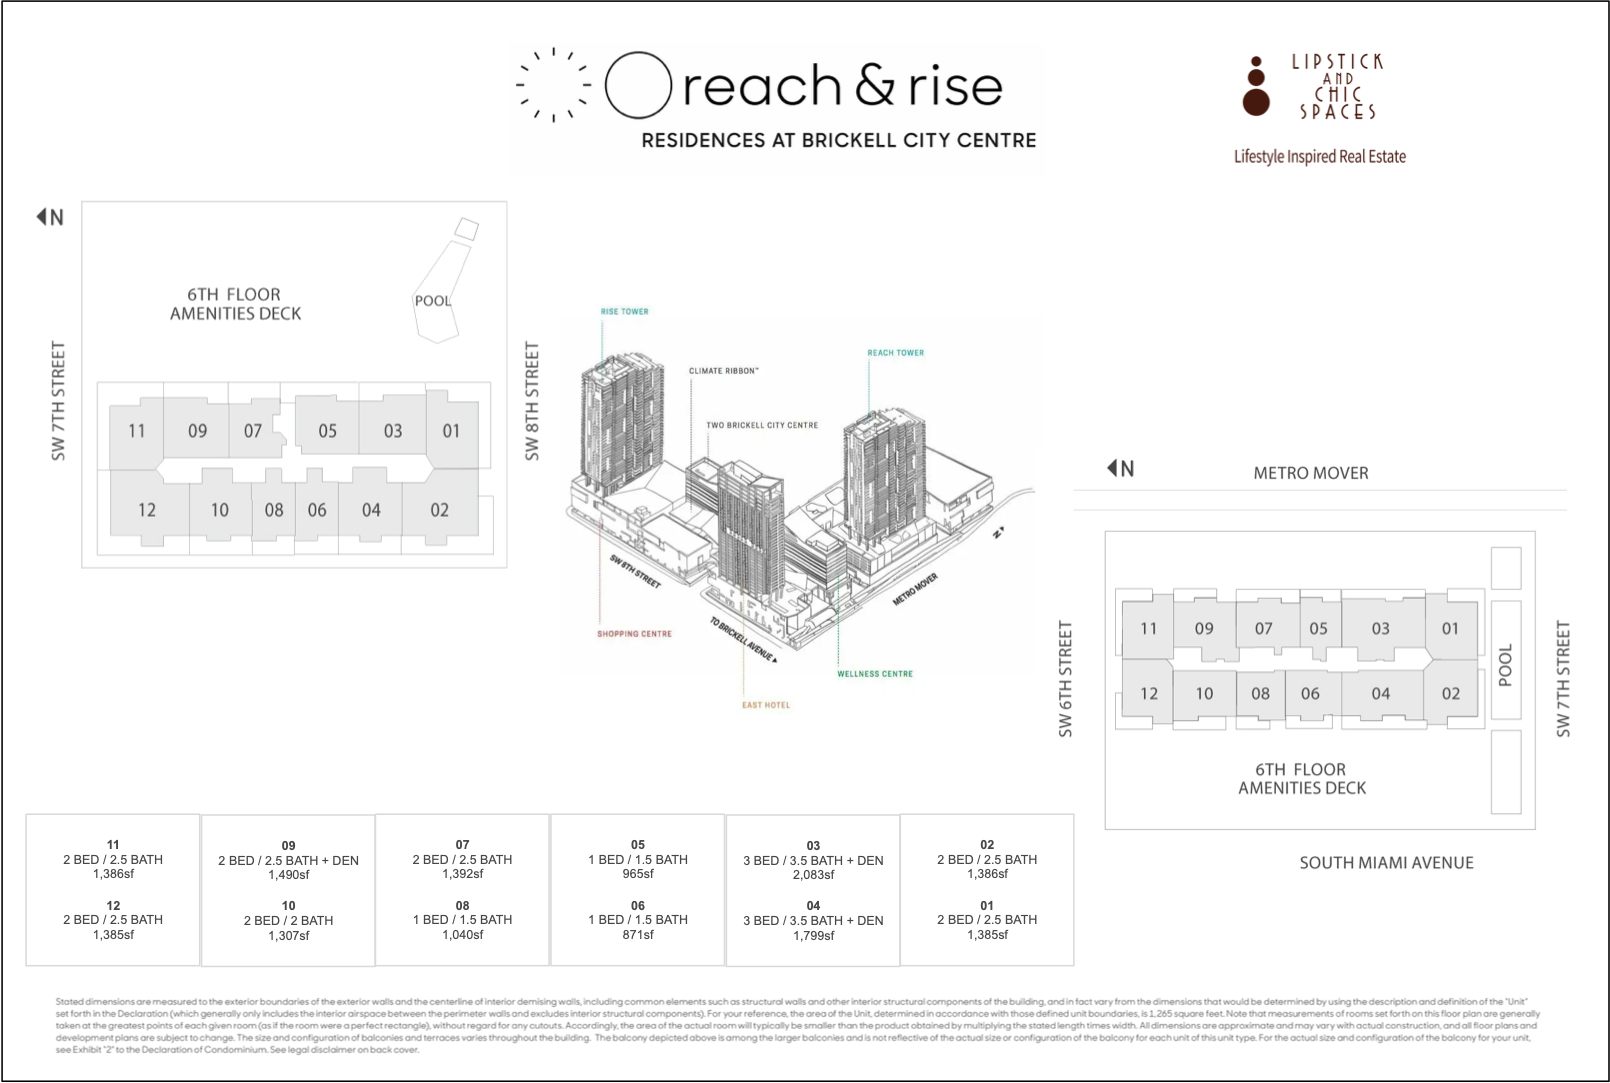 key-plan-reach-rise-brickell-city-centre_lipstickandchicspaces.com.png